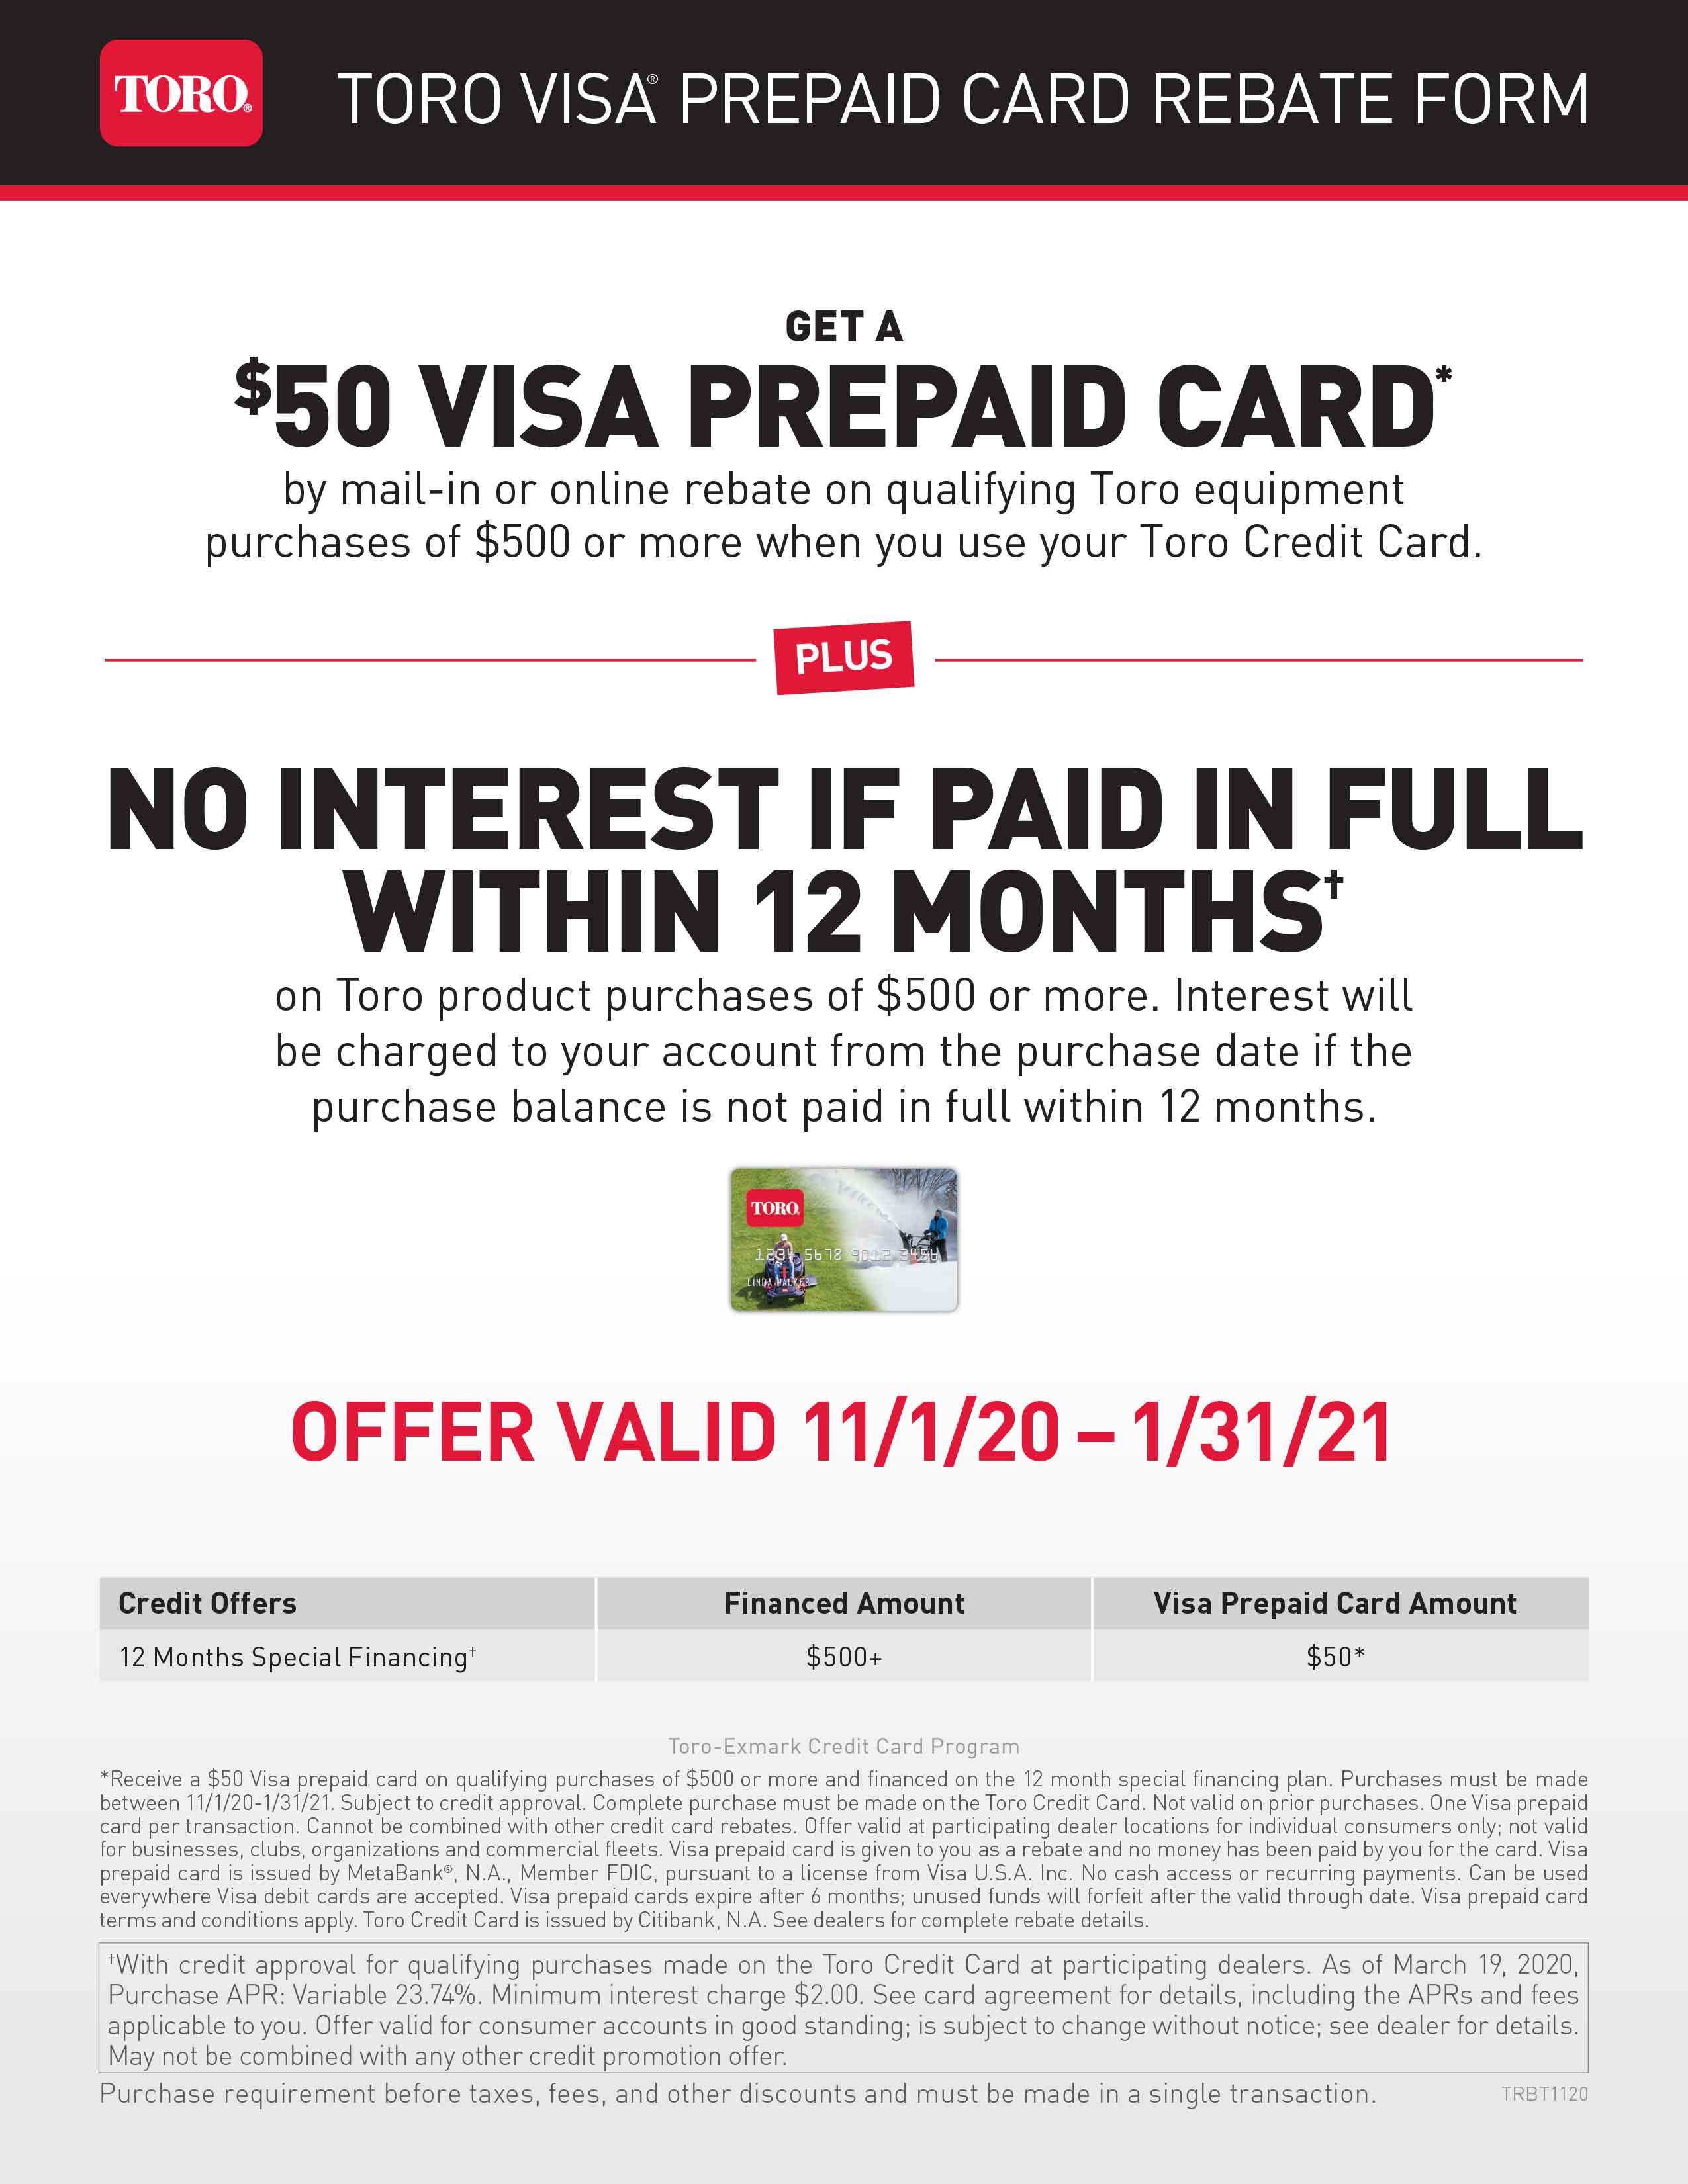 Toro Visa Prepaid Card Rebate Form